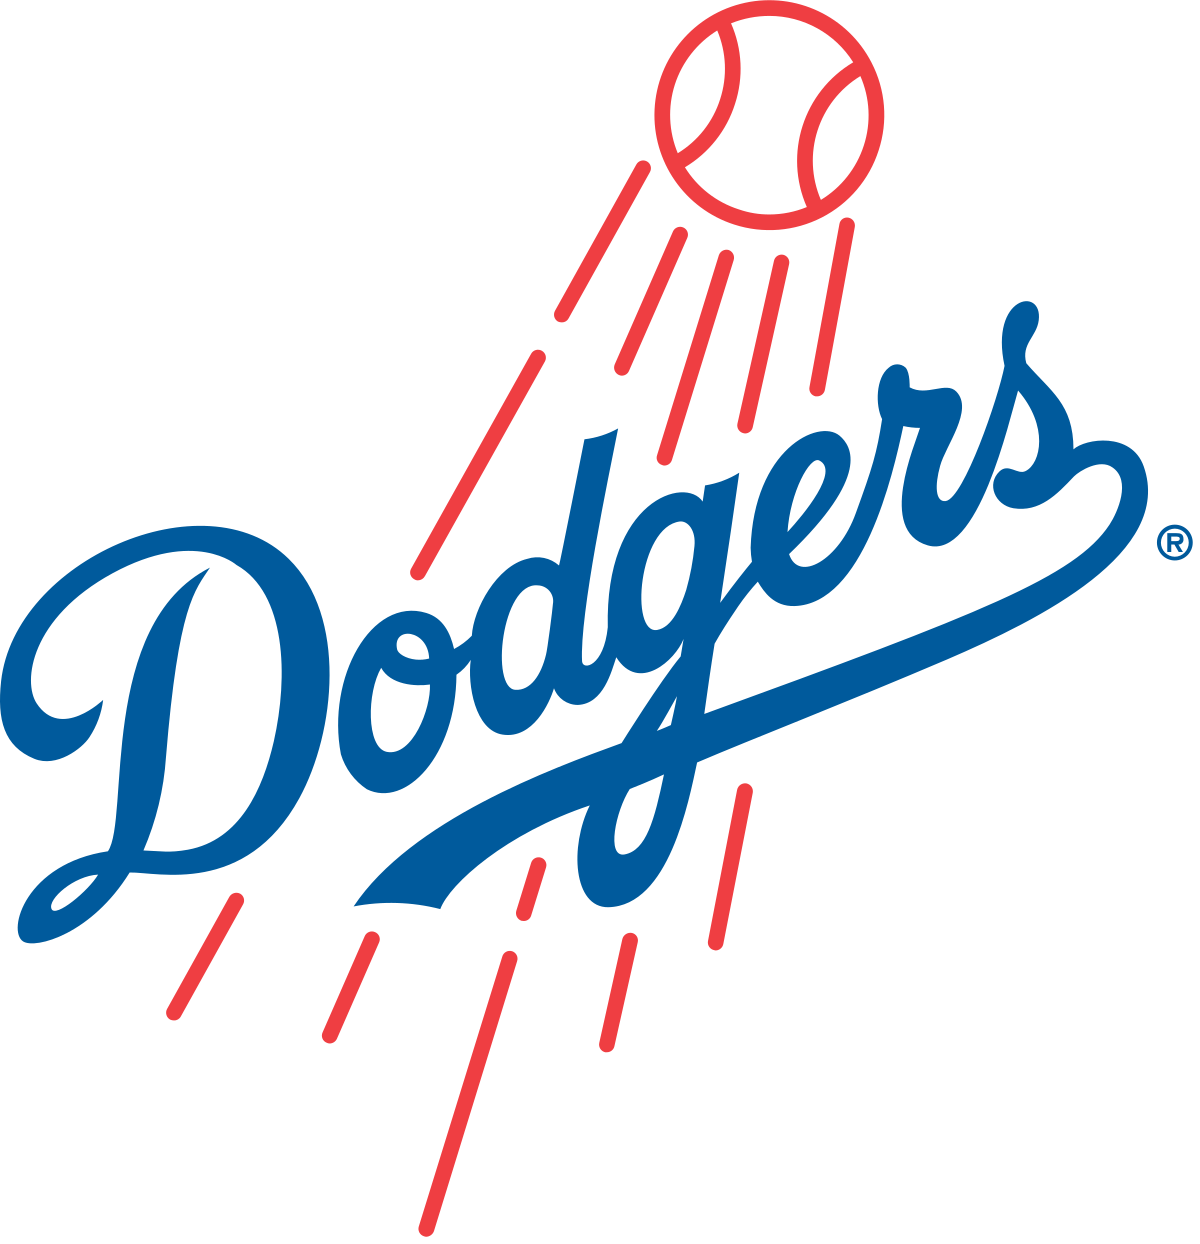 Los Angeles Dodgers 